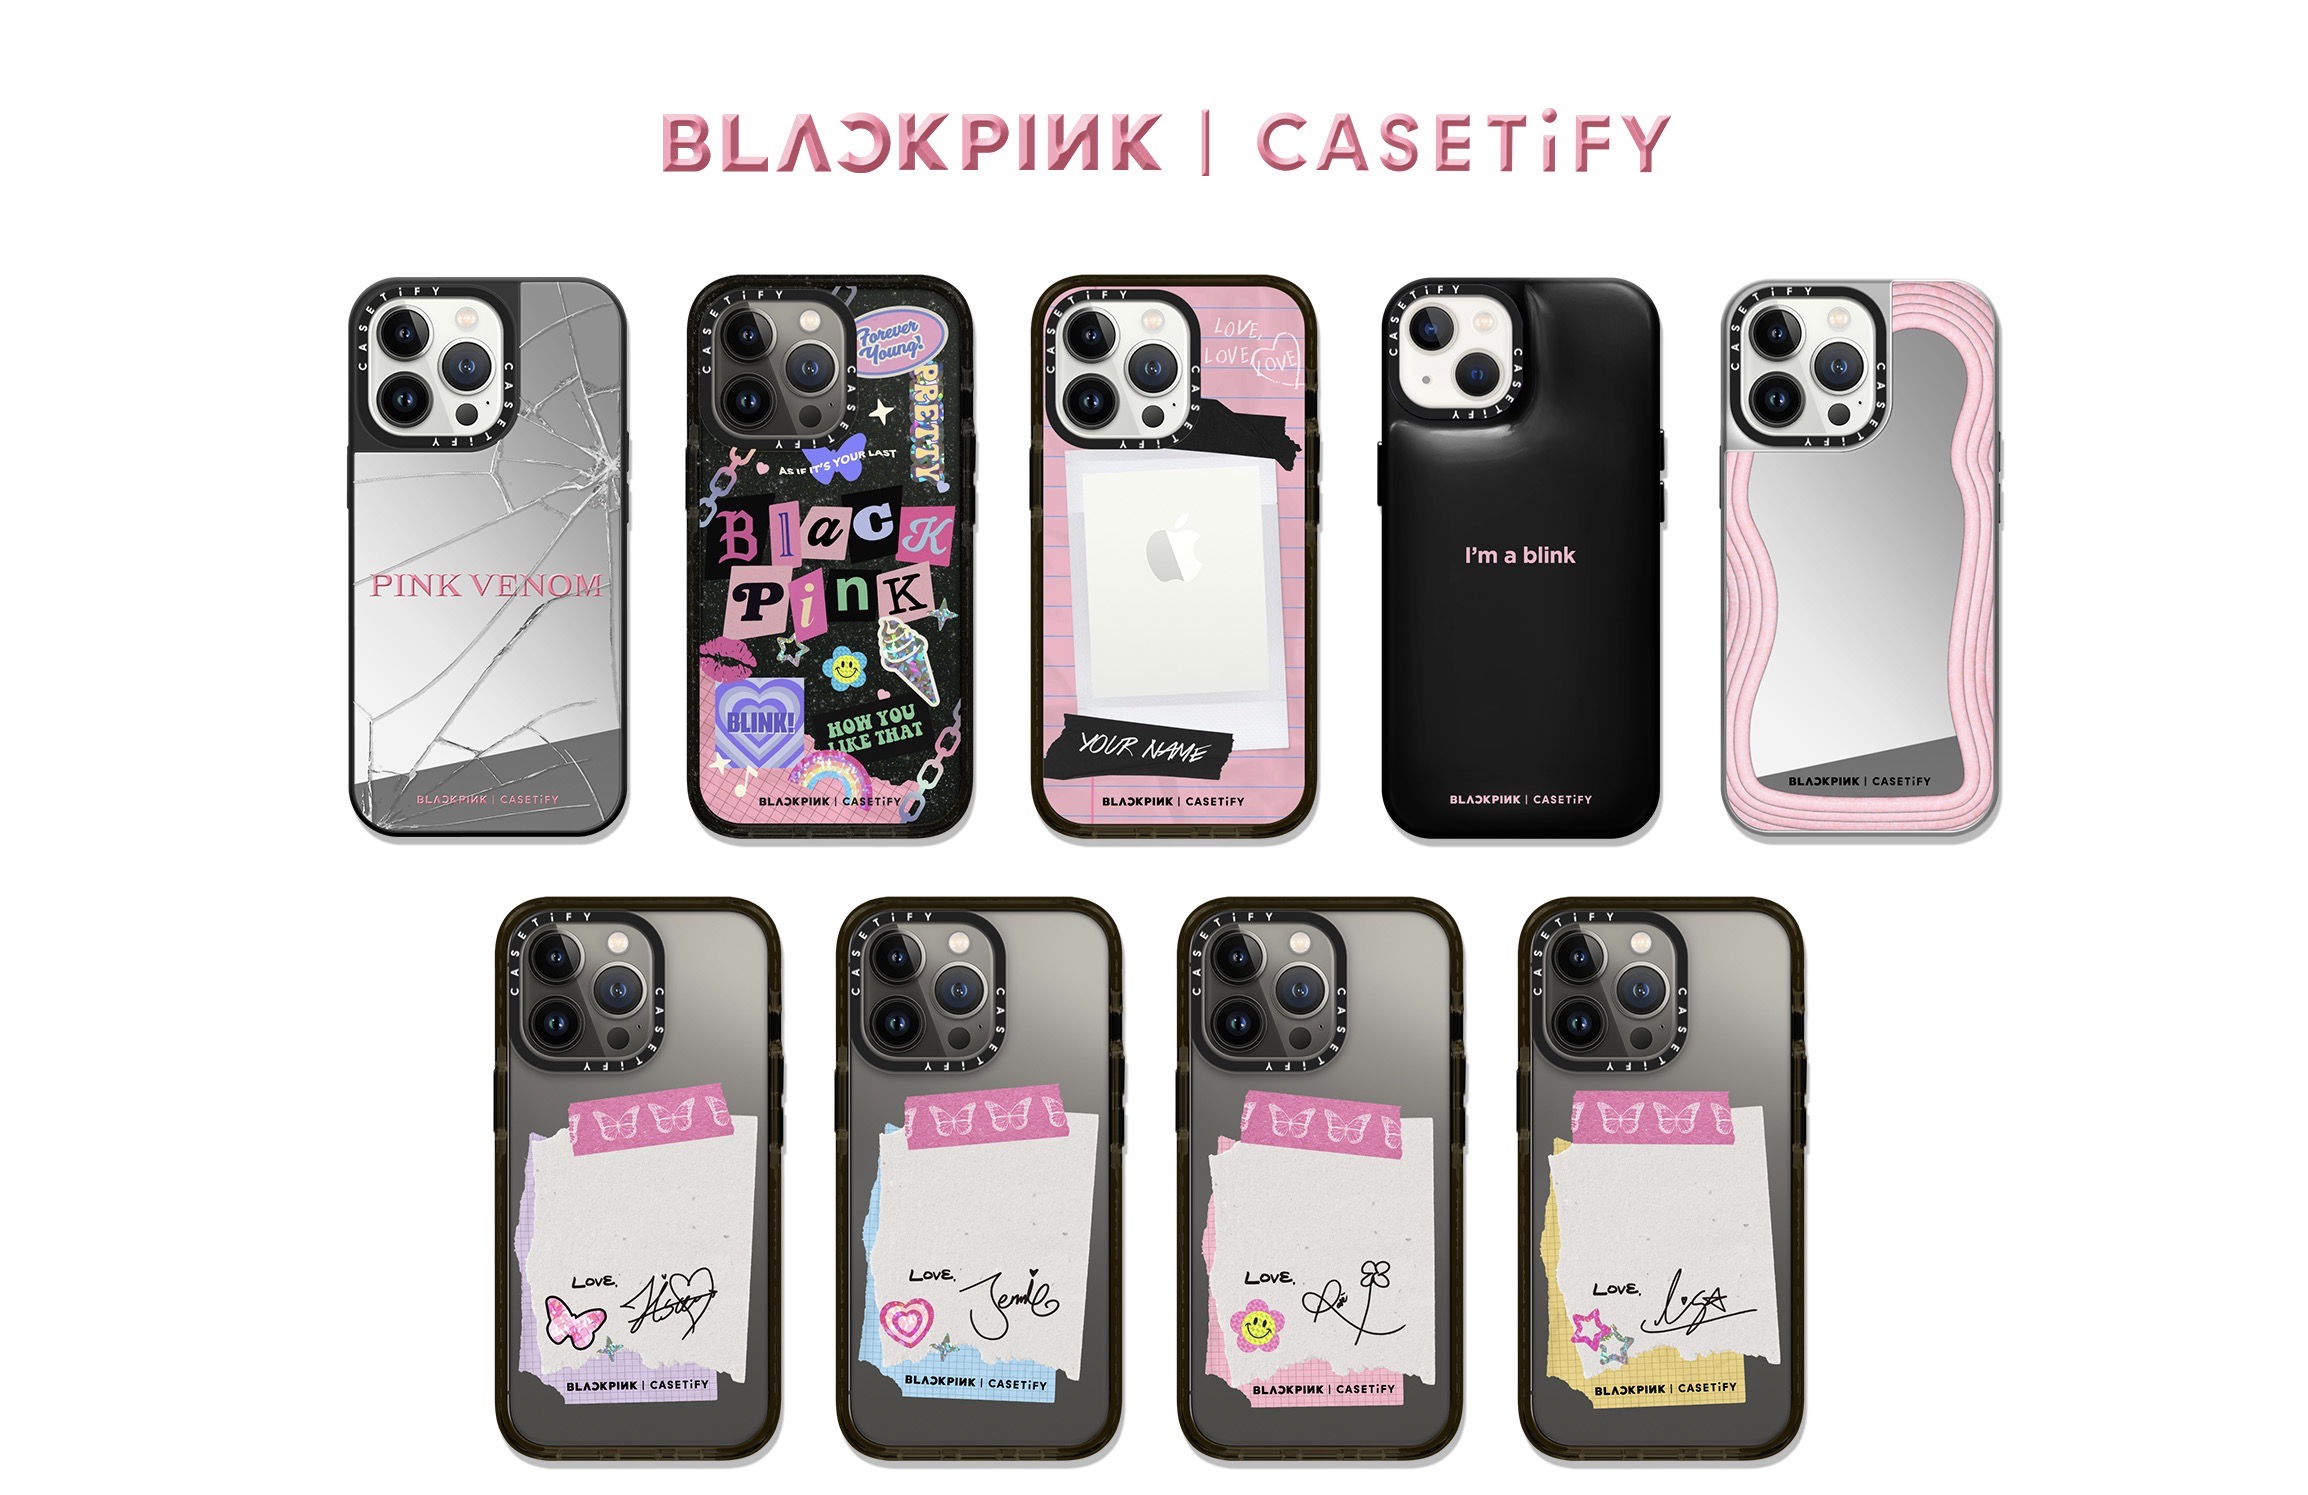 03 Blackpink x Casetify 2022 | blackpink | CASETiFY ปล่อยคอลเลกชั่น ‘BLACKPINK’ เอาใจชาว BLINKS